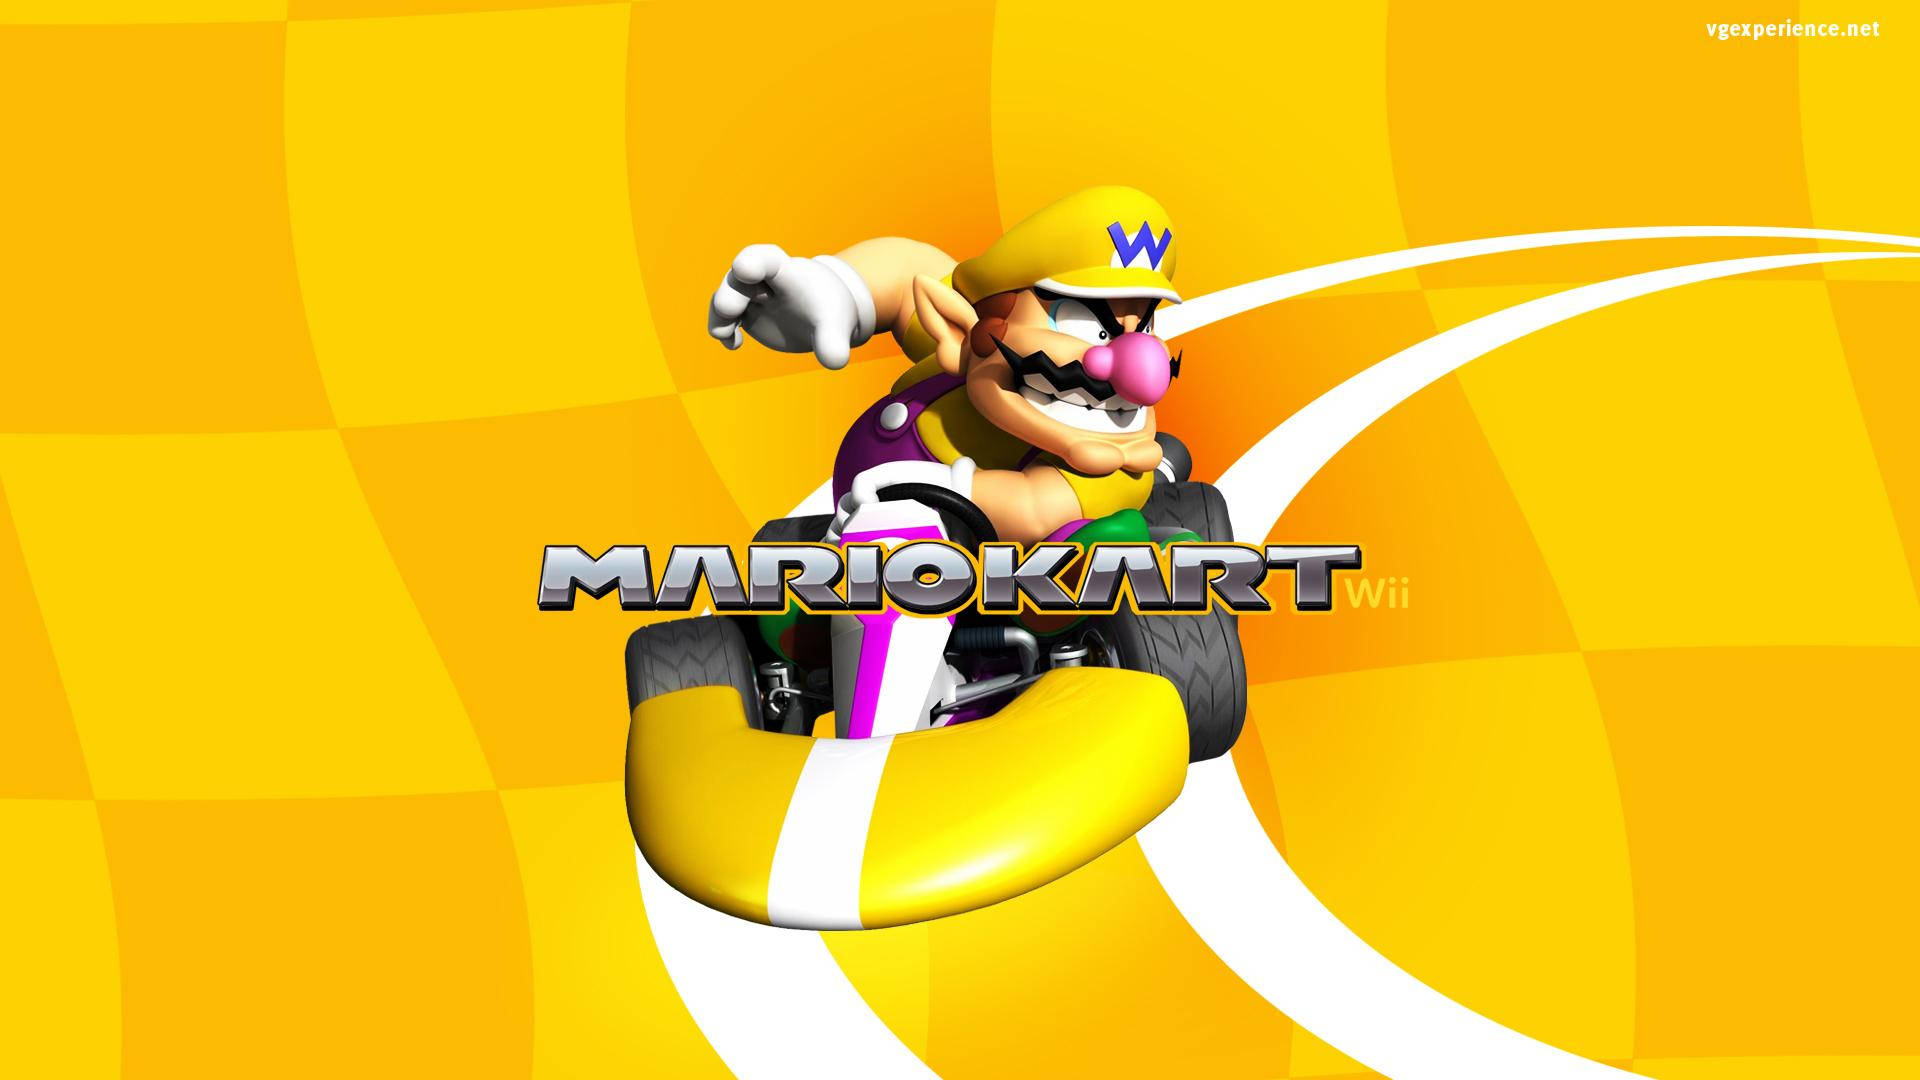 Wii Sports Mariokart Video Game Character Wallpaper